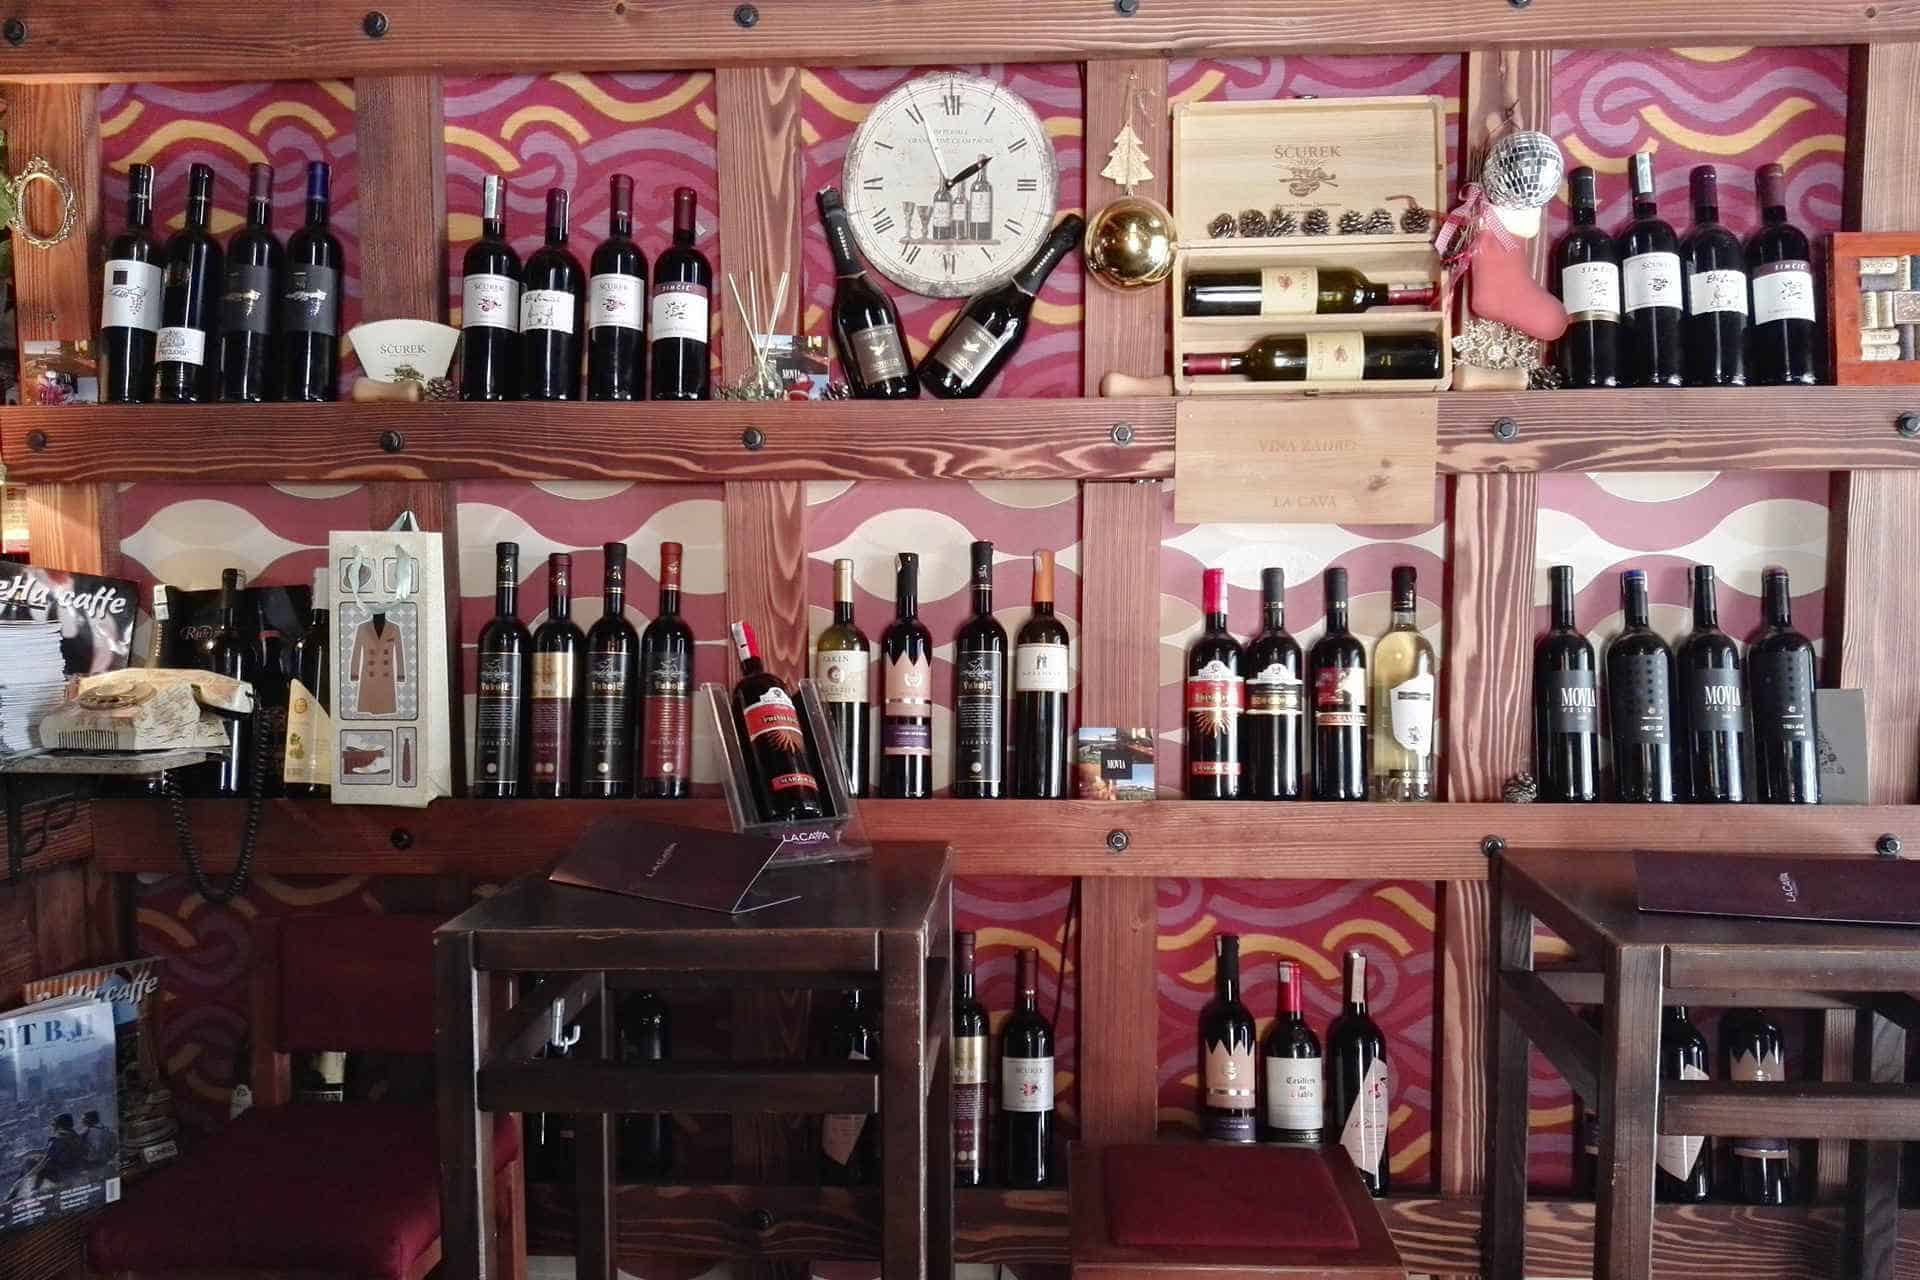 Wide assortment of wines